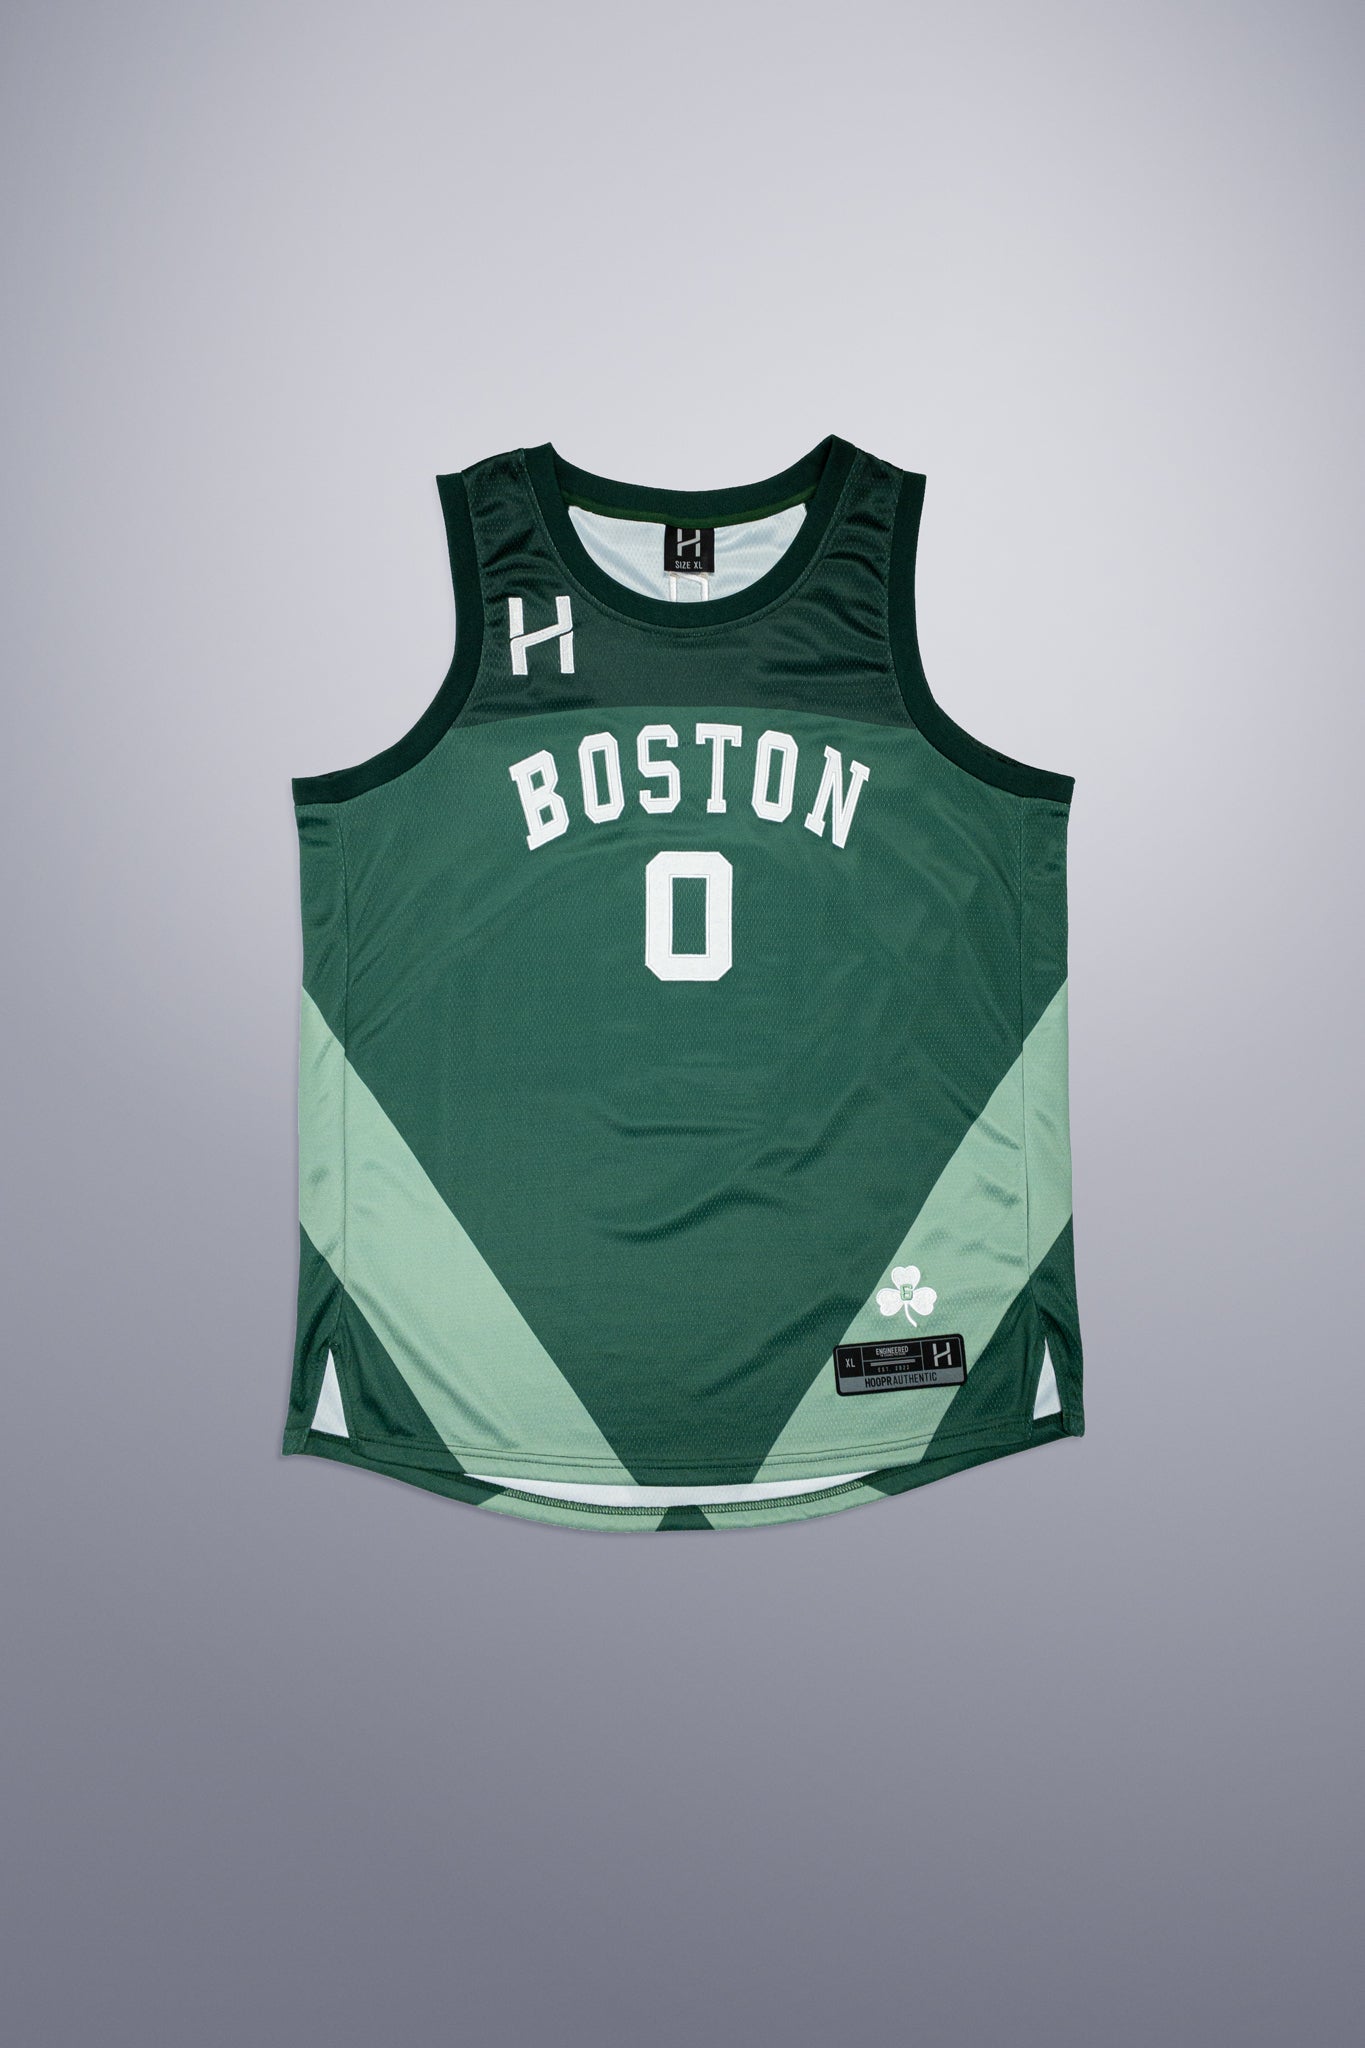 Boston Bleed Green Jersey